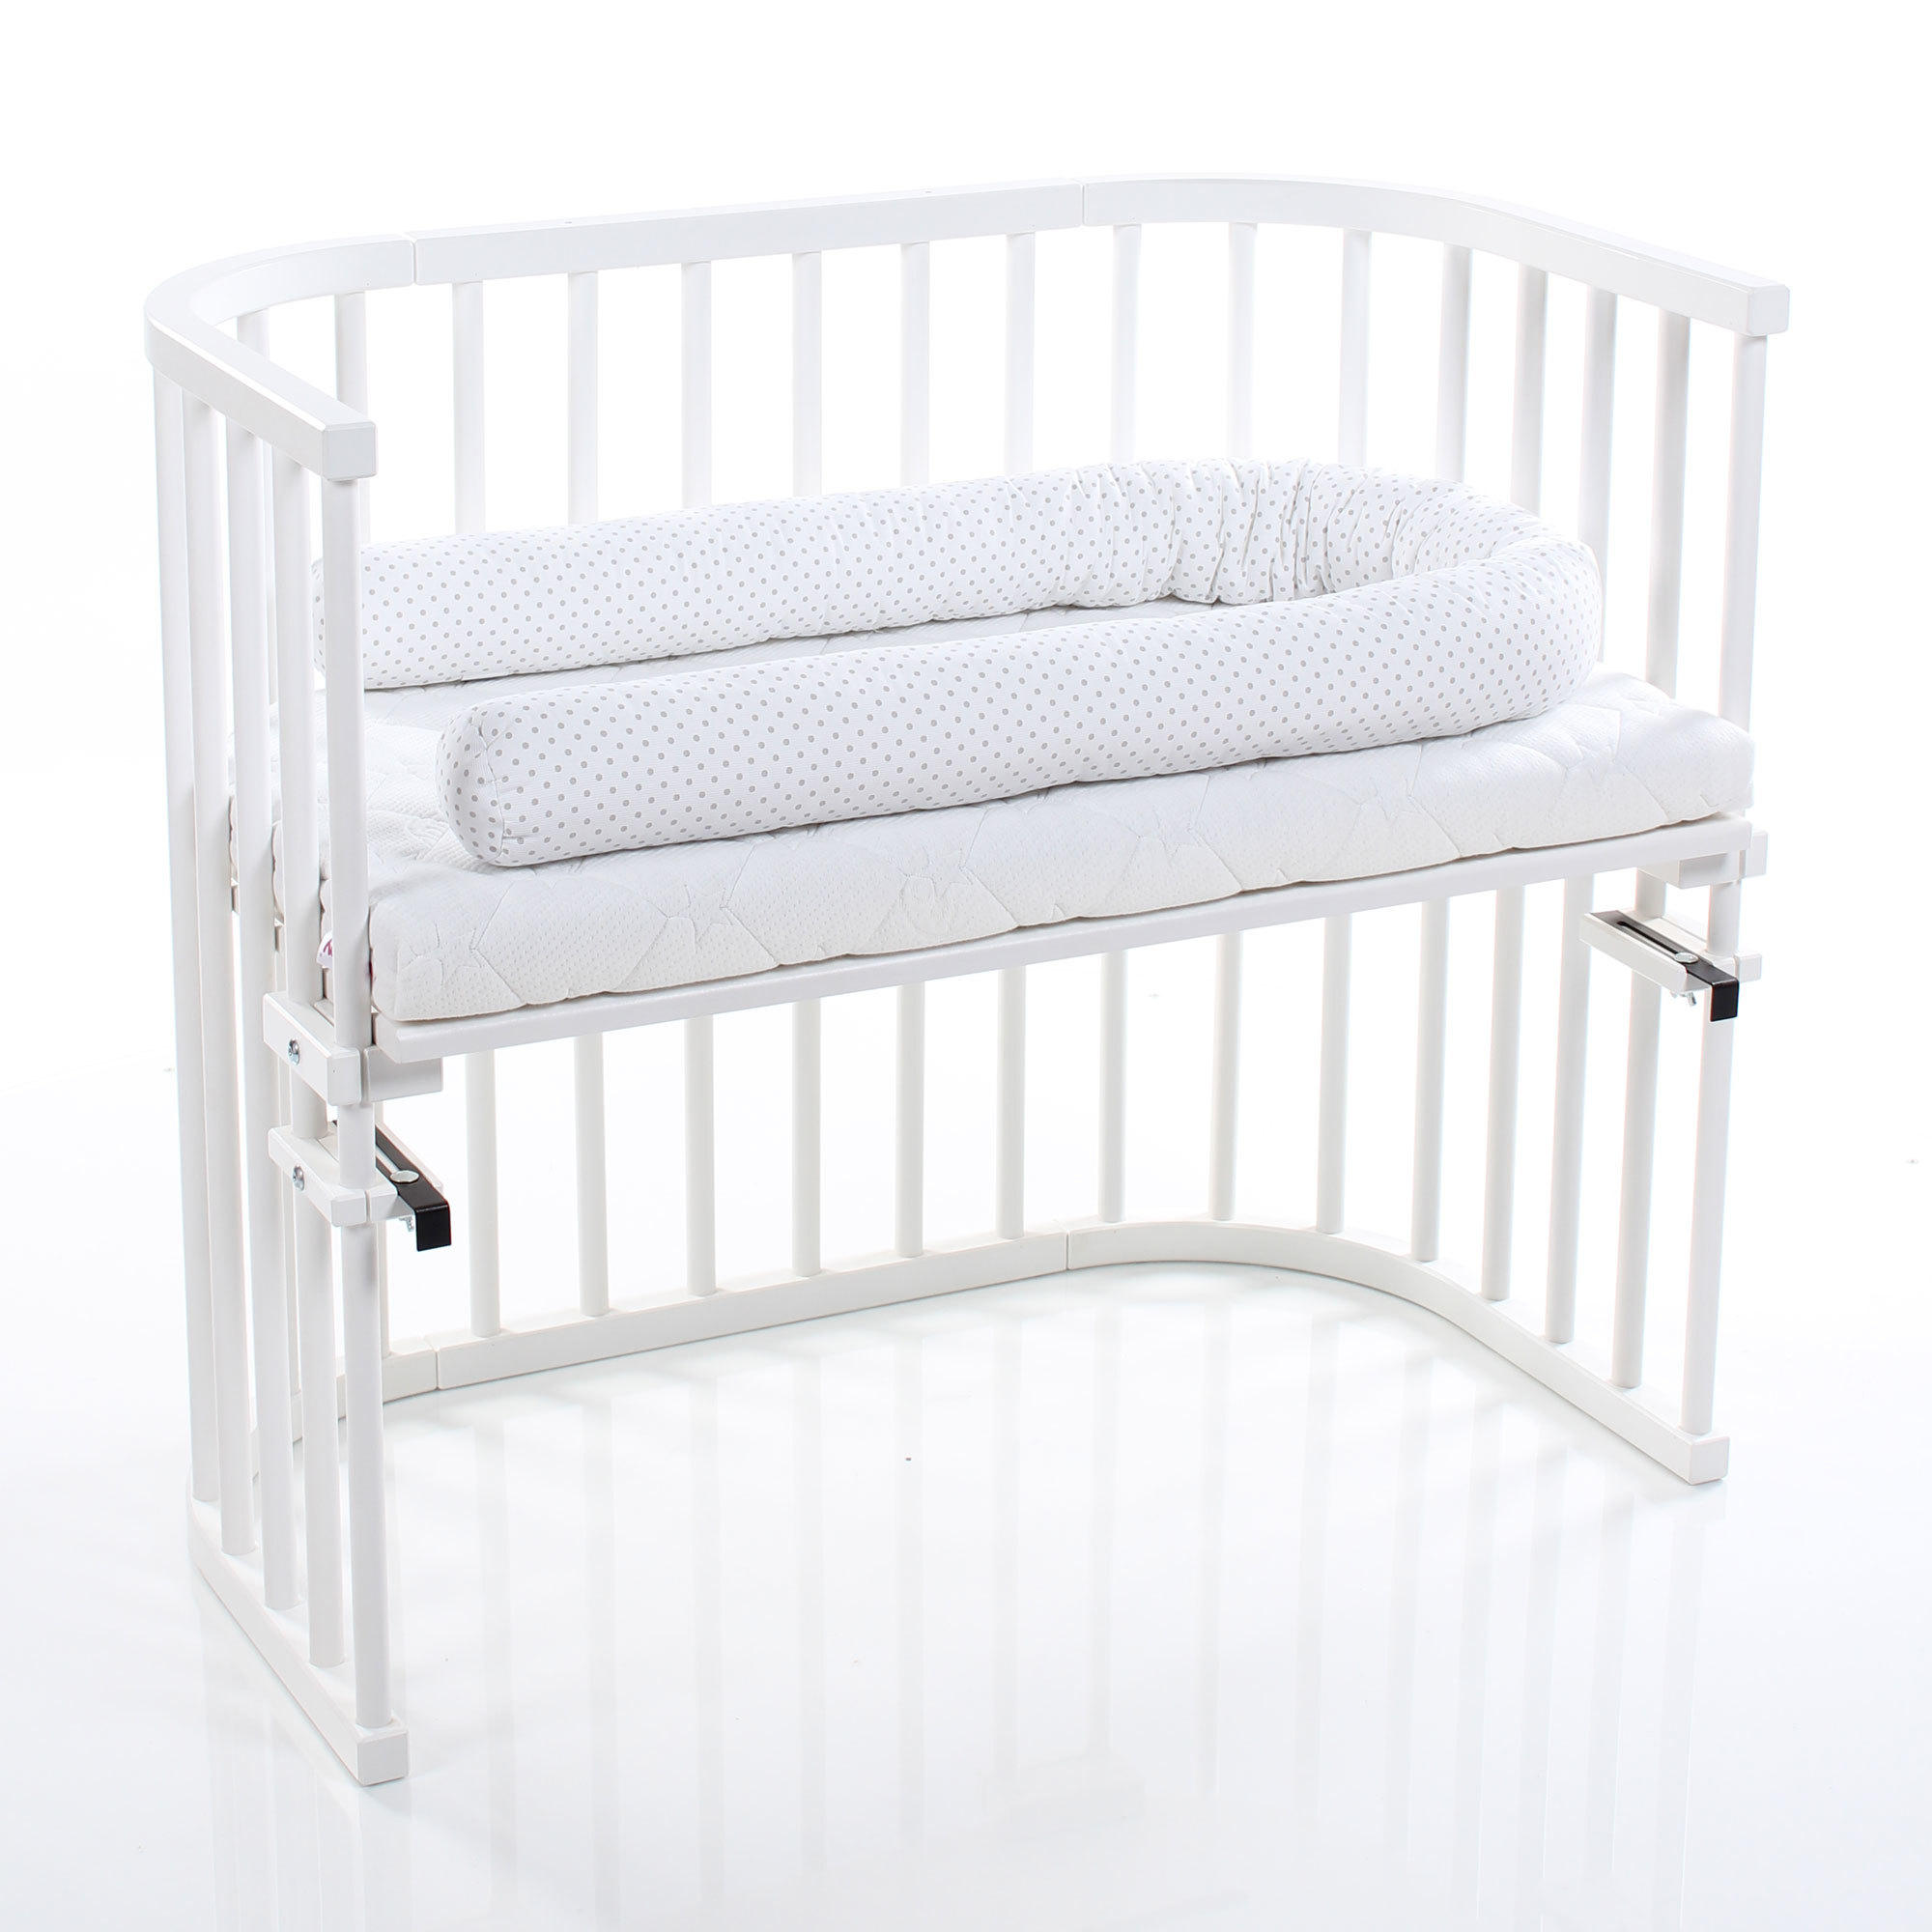 Nestchenschlange Piqué Babybay   9/180 cm  - Hellgrau/Weiß, Basics, Textil (9/180cm) - Babybay